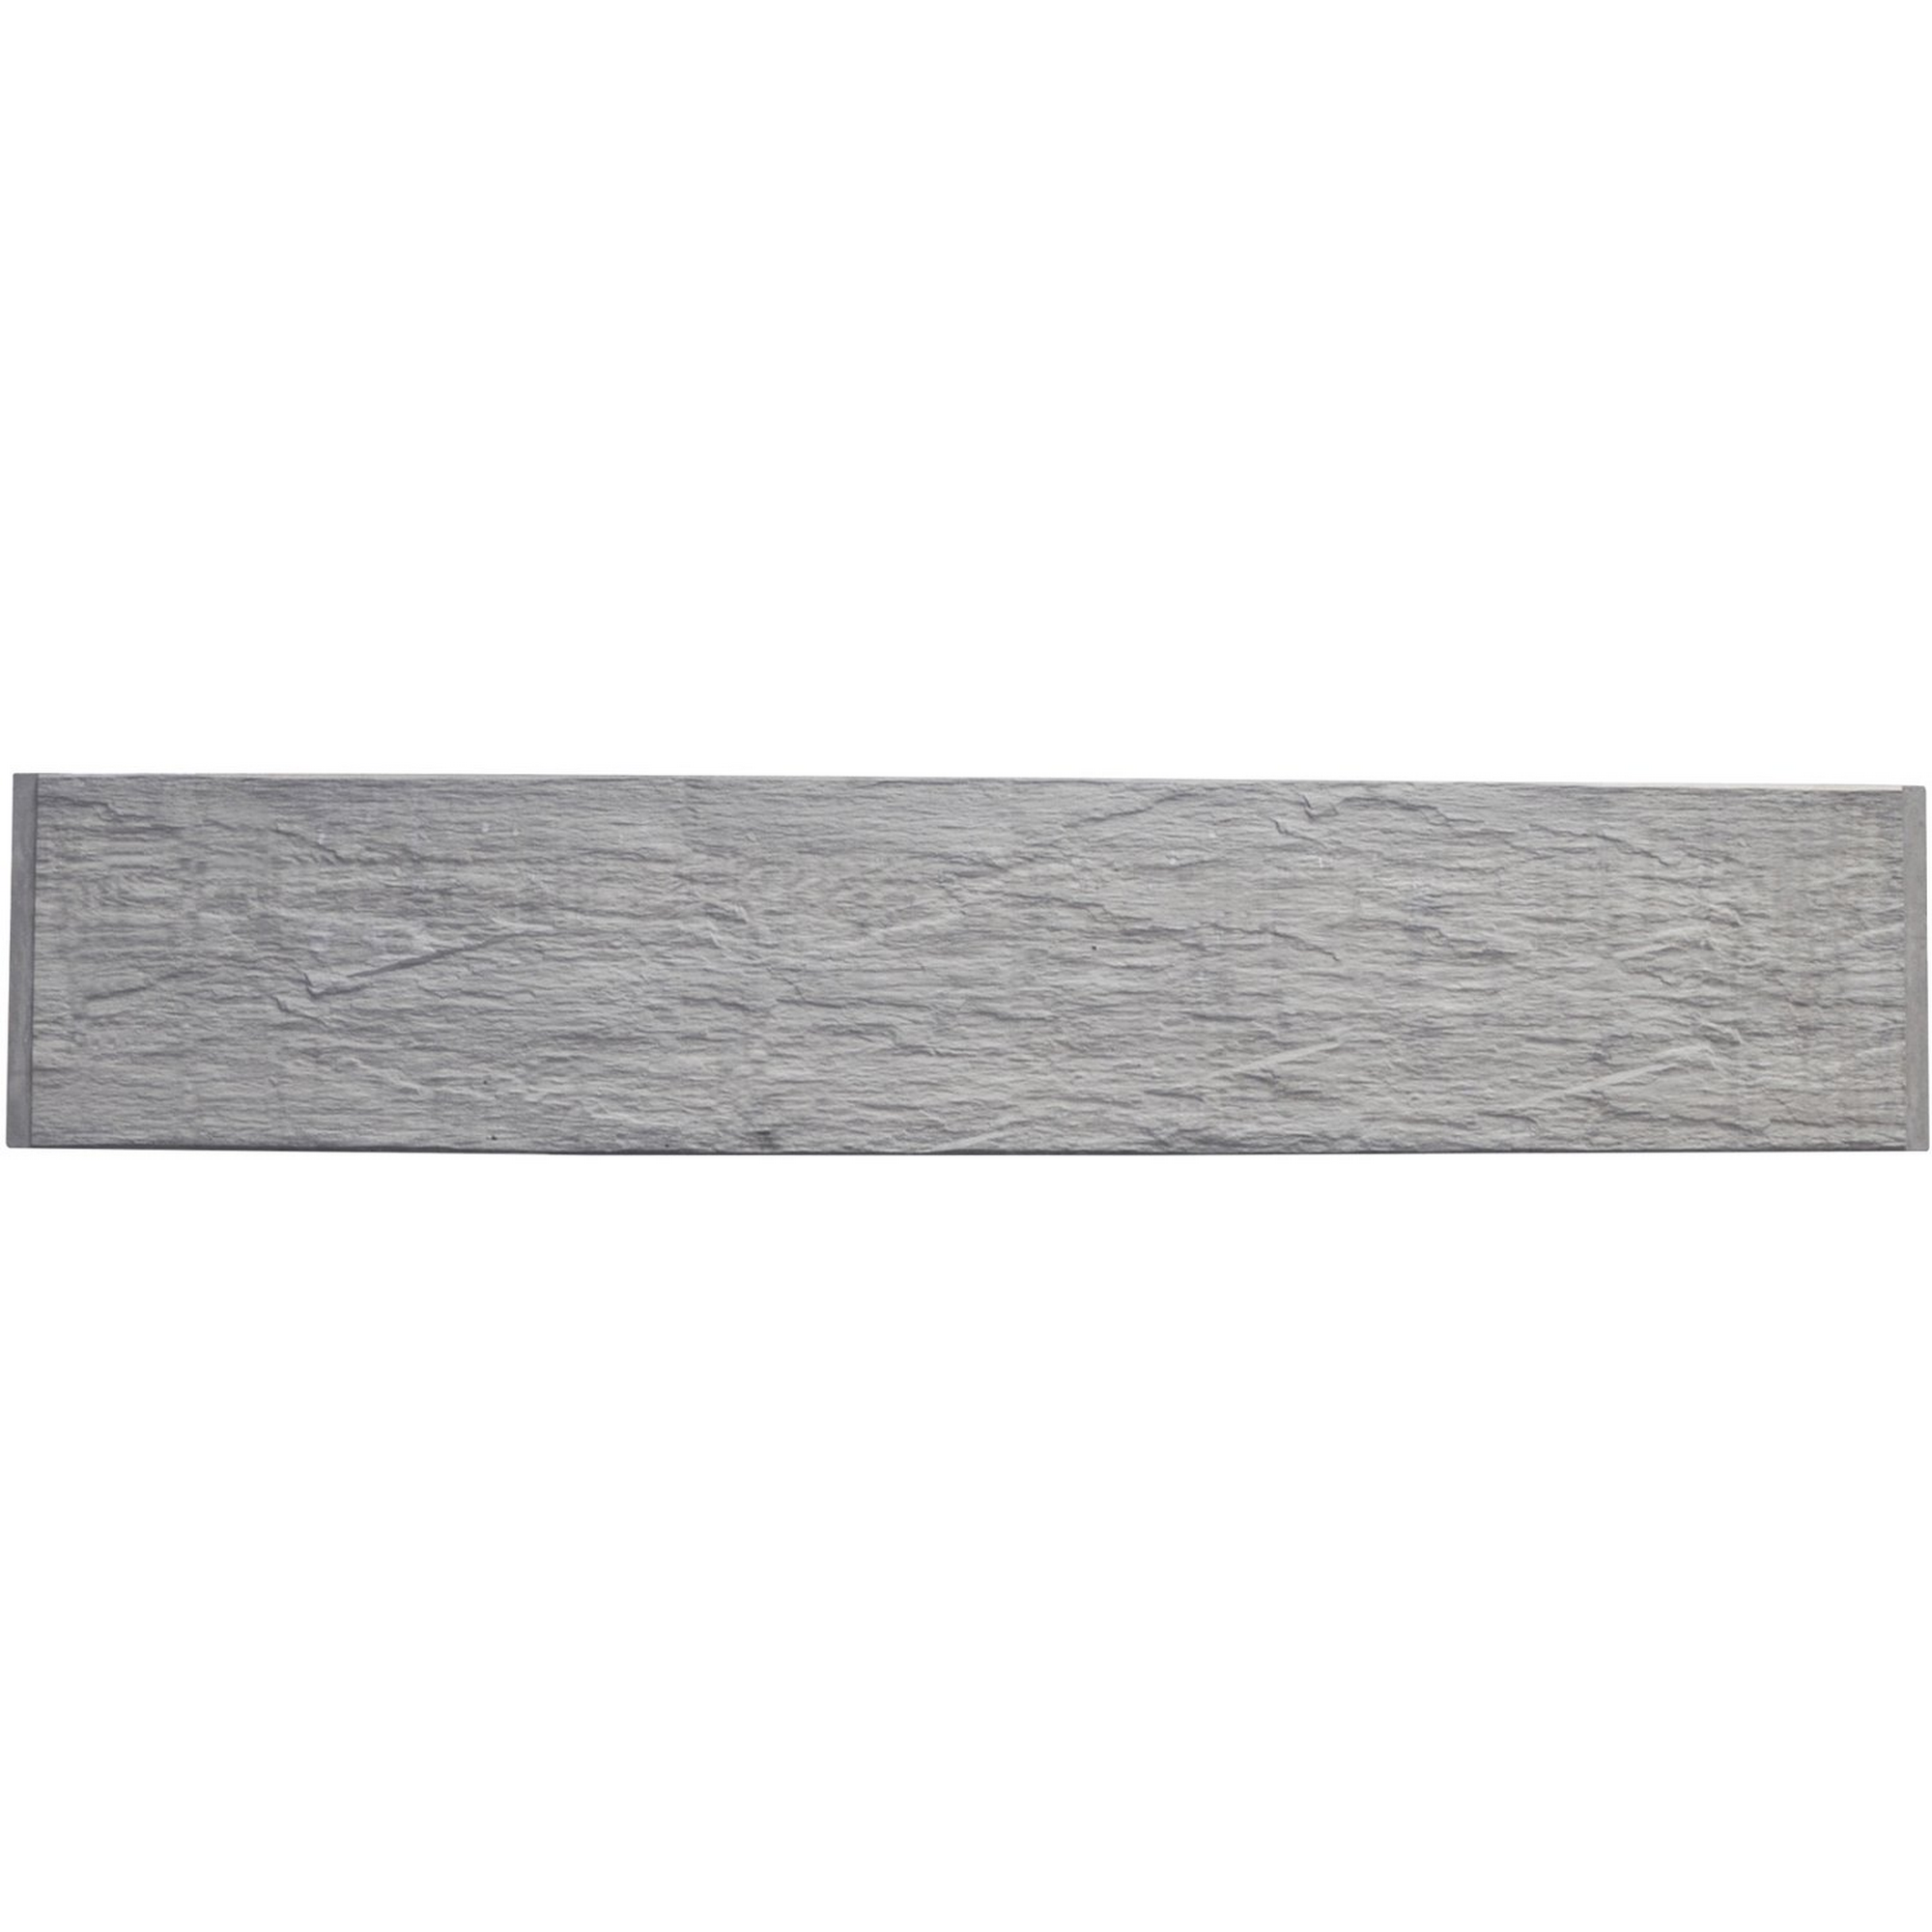 Betonzaunplatte 'Standard Nevada' 200 x 38,5 x 3,5 cm grau + product picture